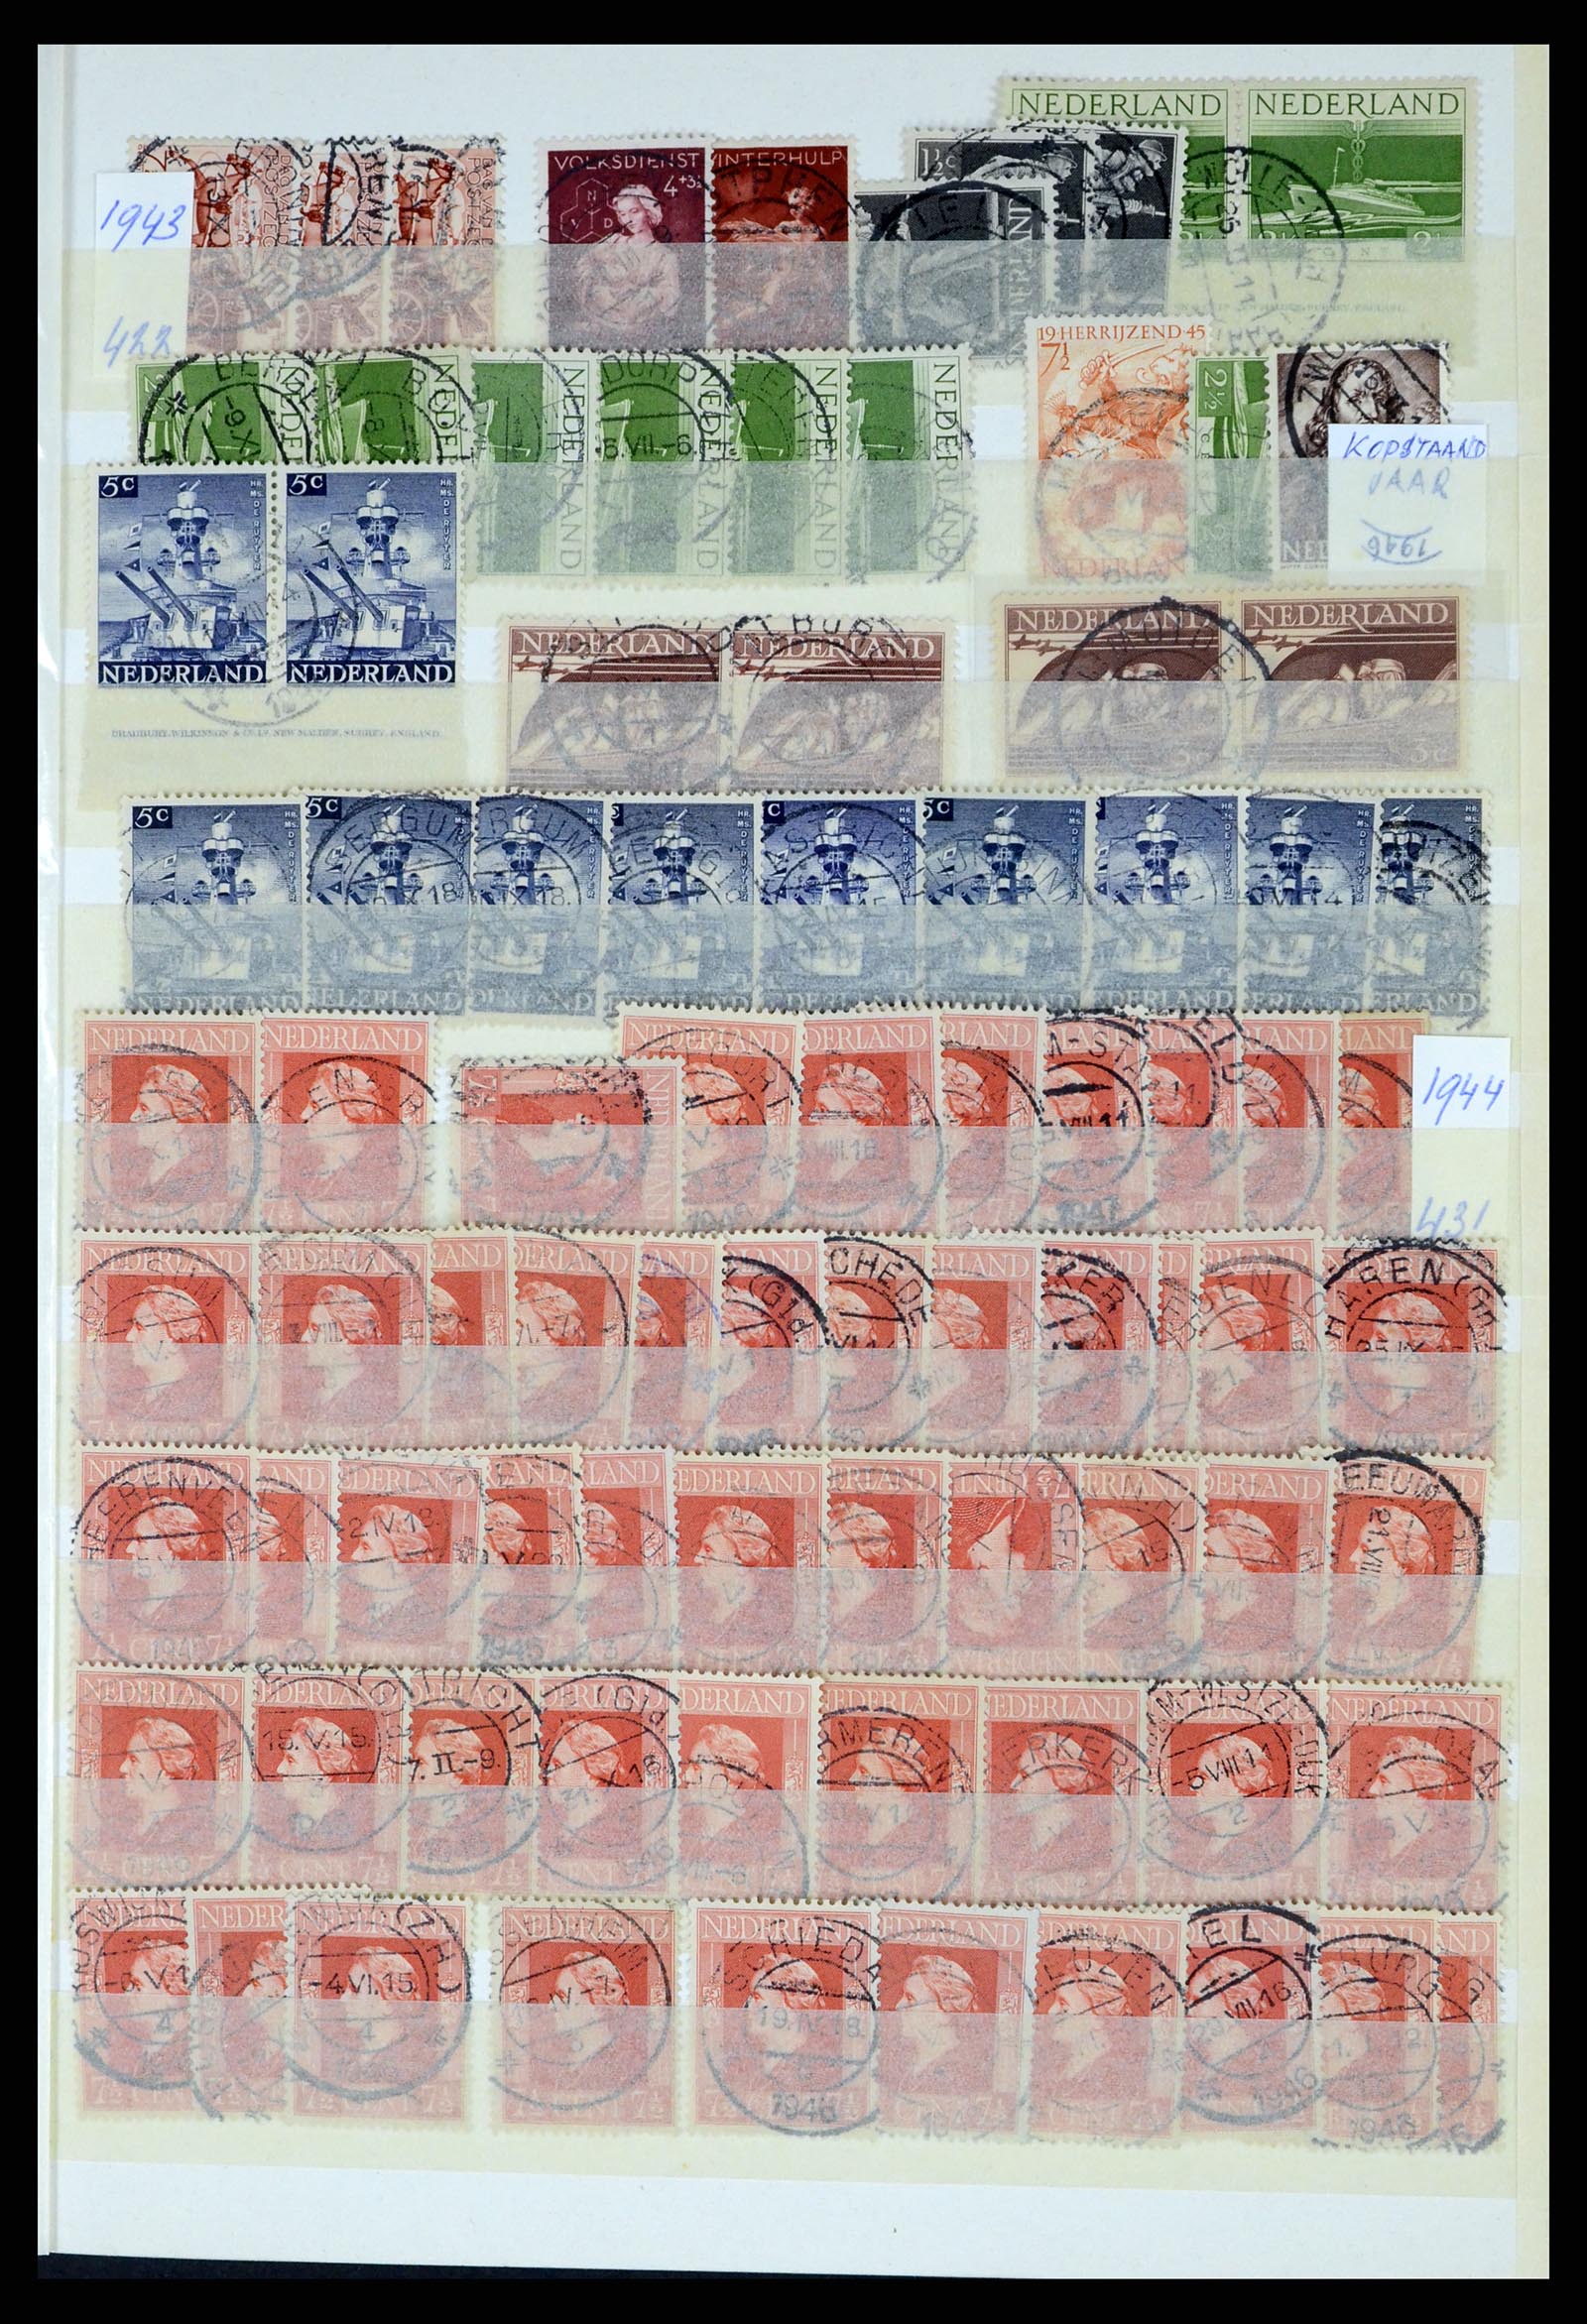 37424 039 - Stamp collection 37424 Netherlands shortbar cancels.